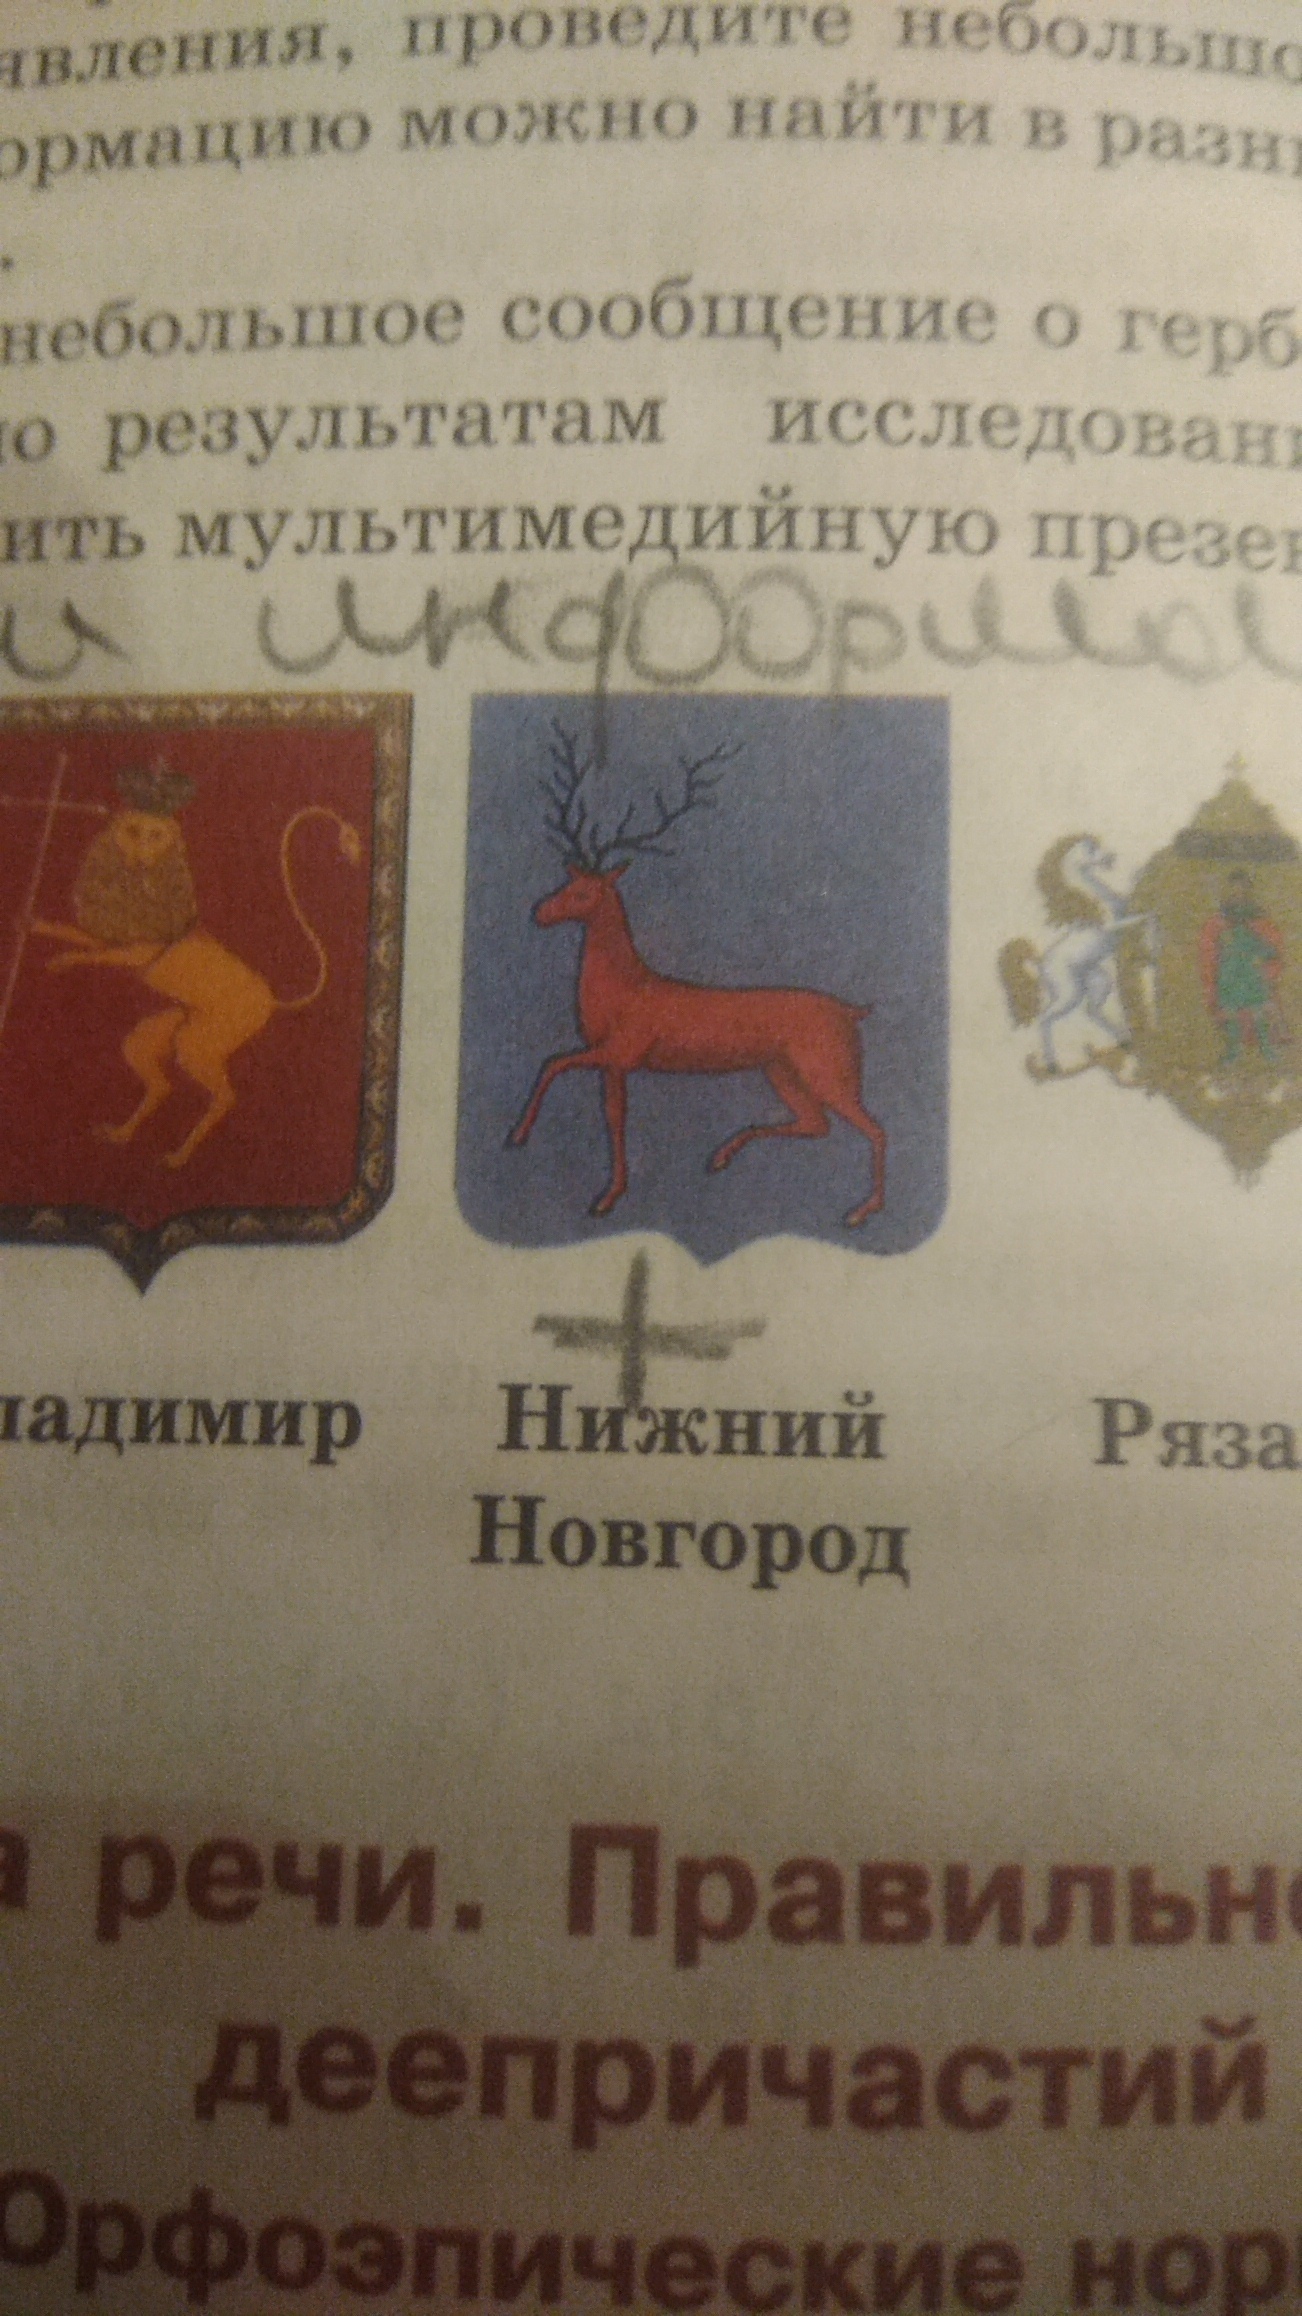 Герб новгород описание